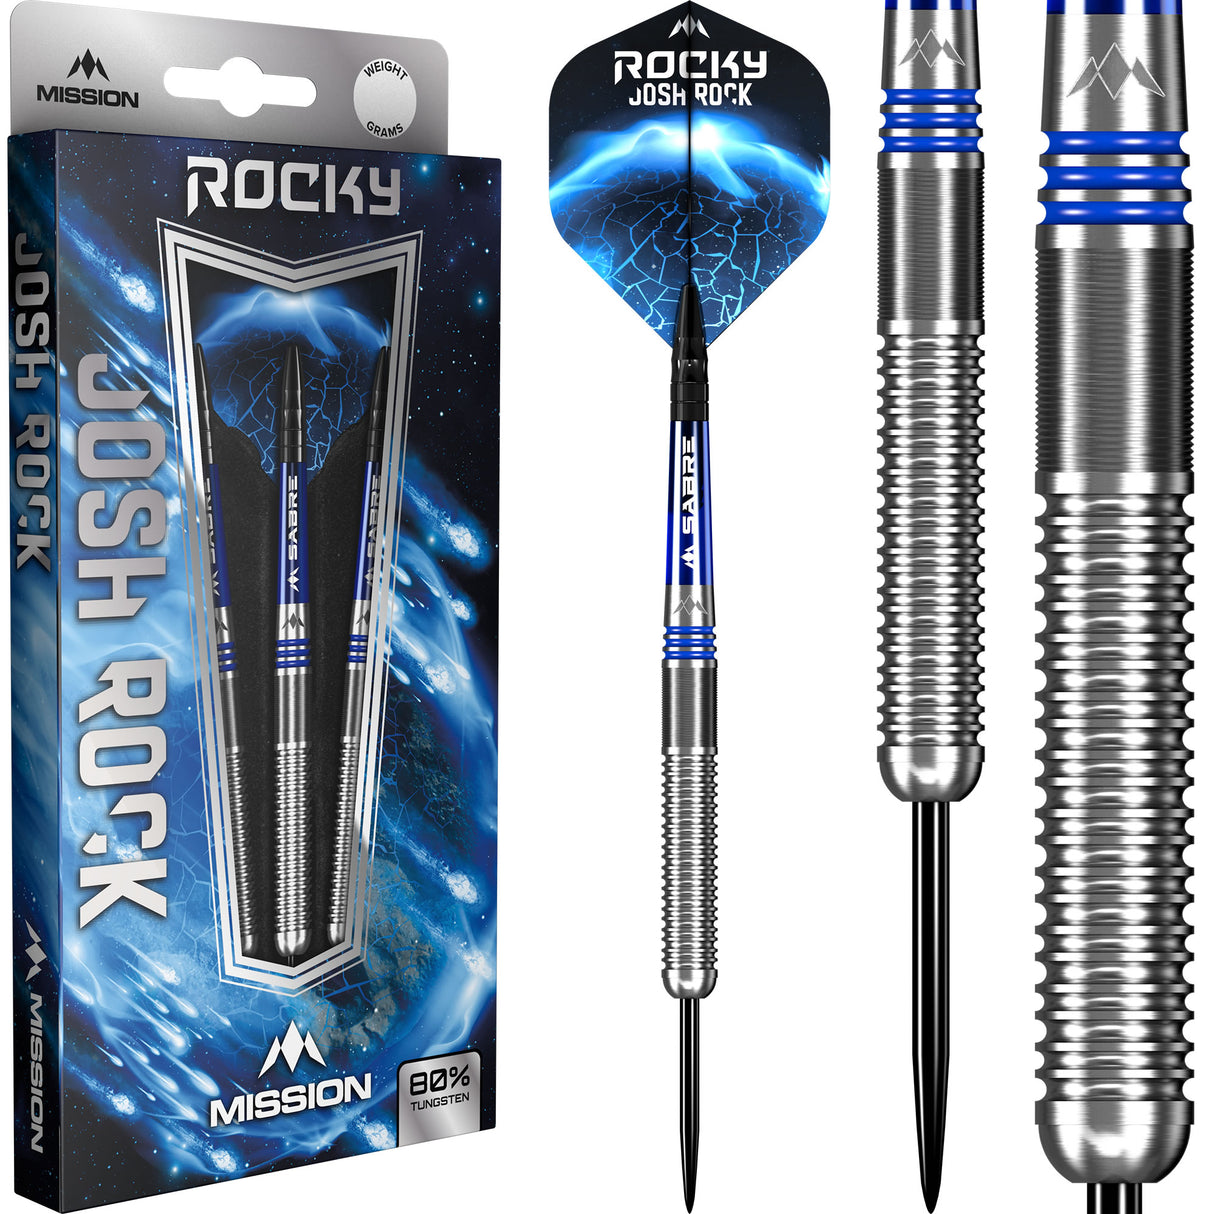 Mission Josh Rock Darts - Steel Tip - 80% - Rocky - Silver & Blue